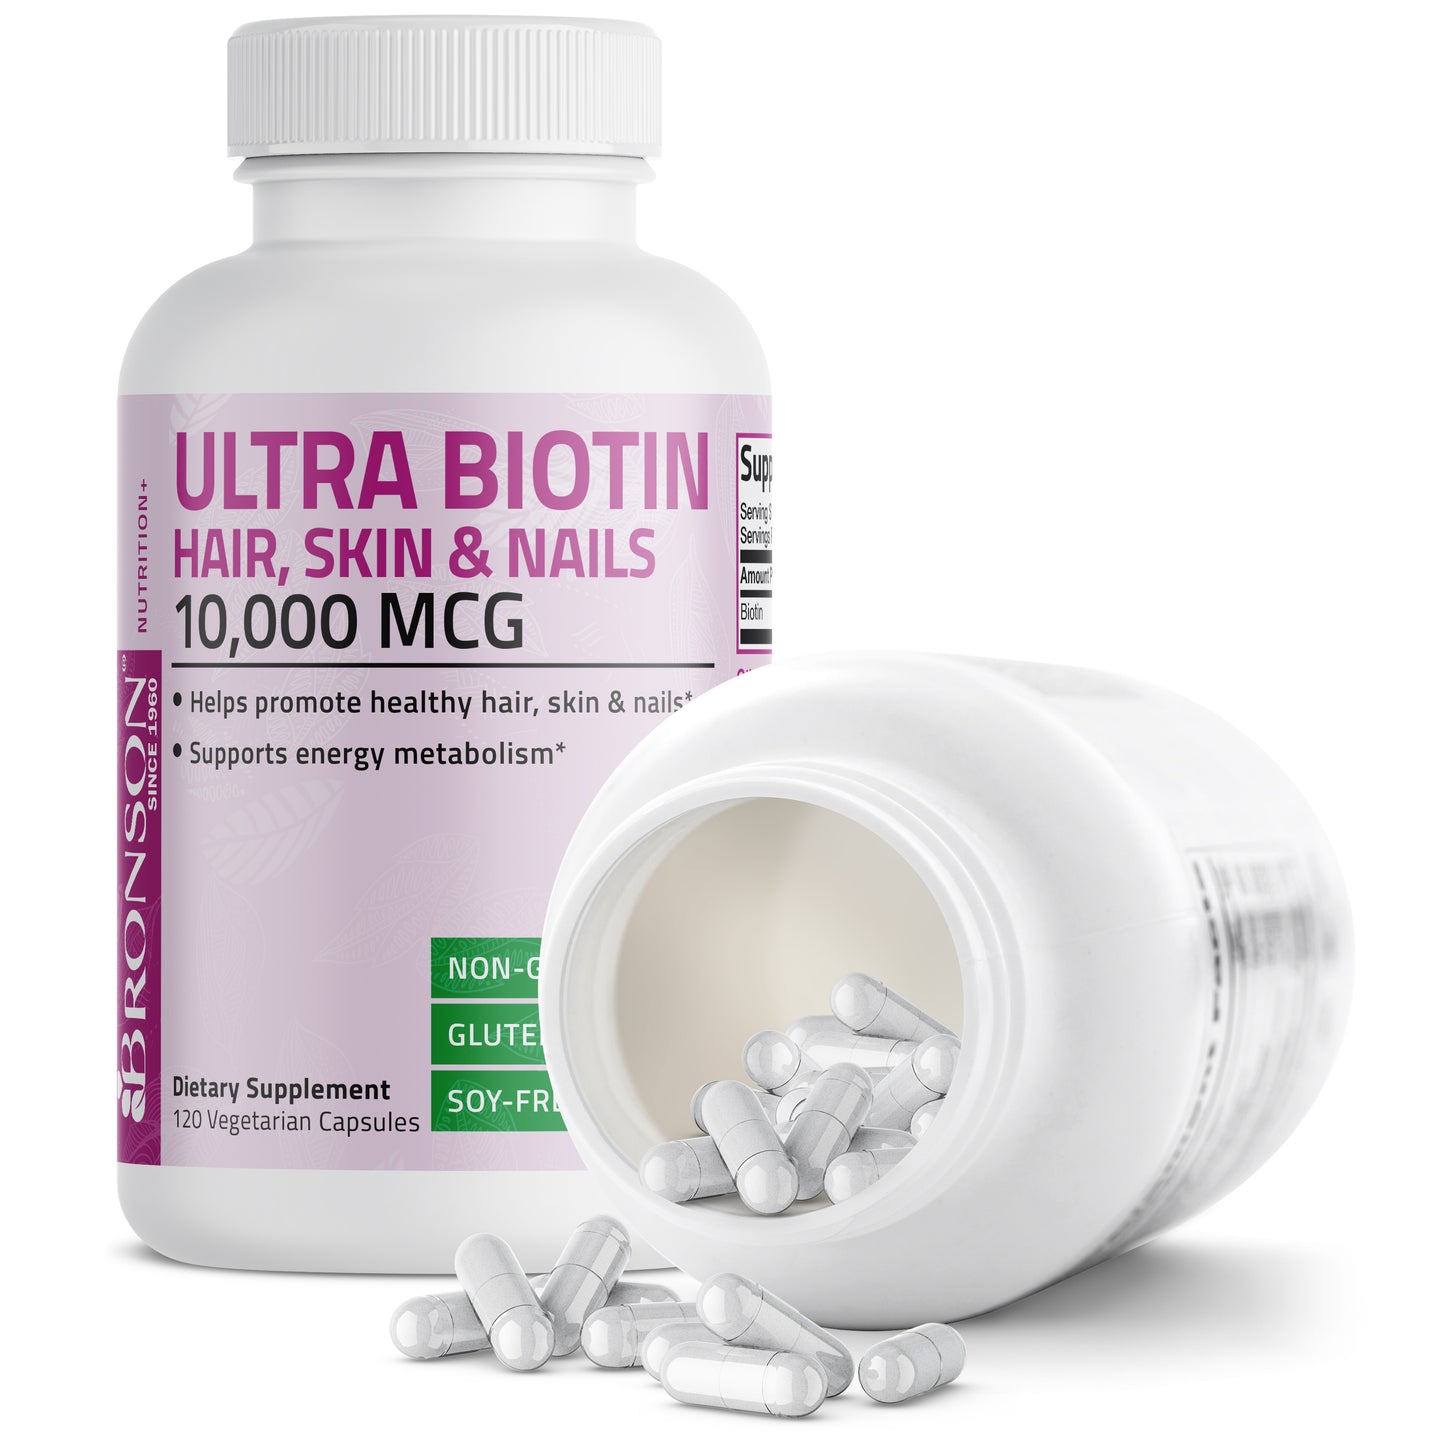 Ultra Biotin Hair, Skin & Nails - 10,000 mcg